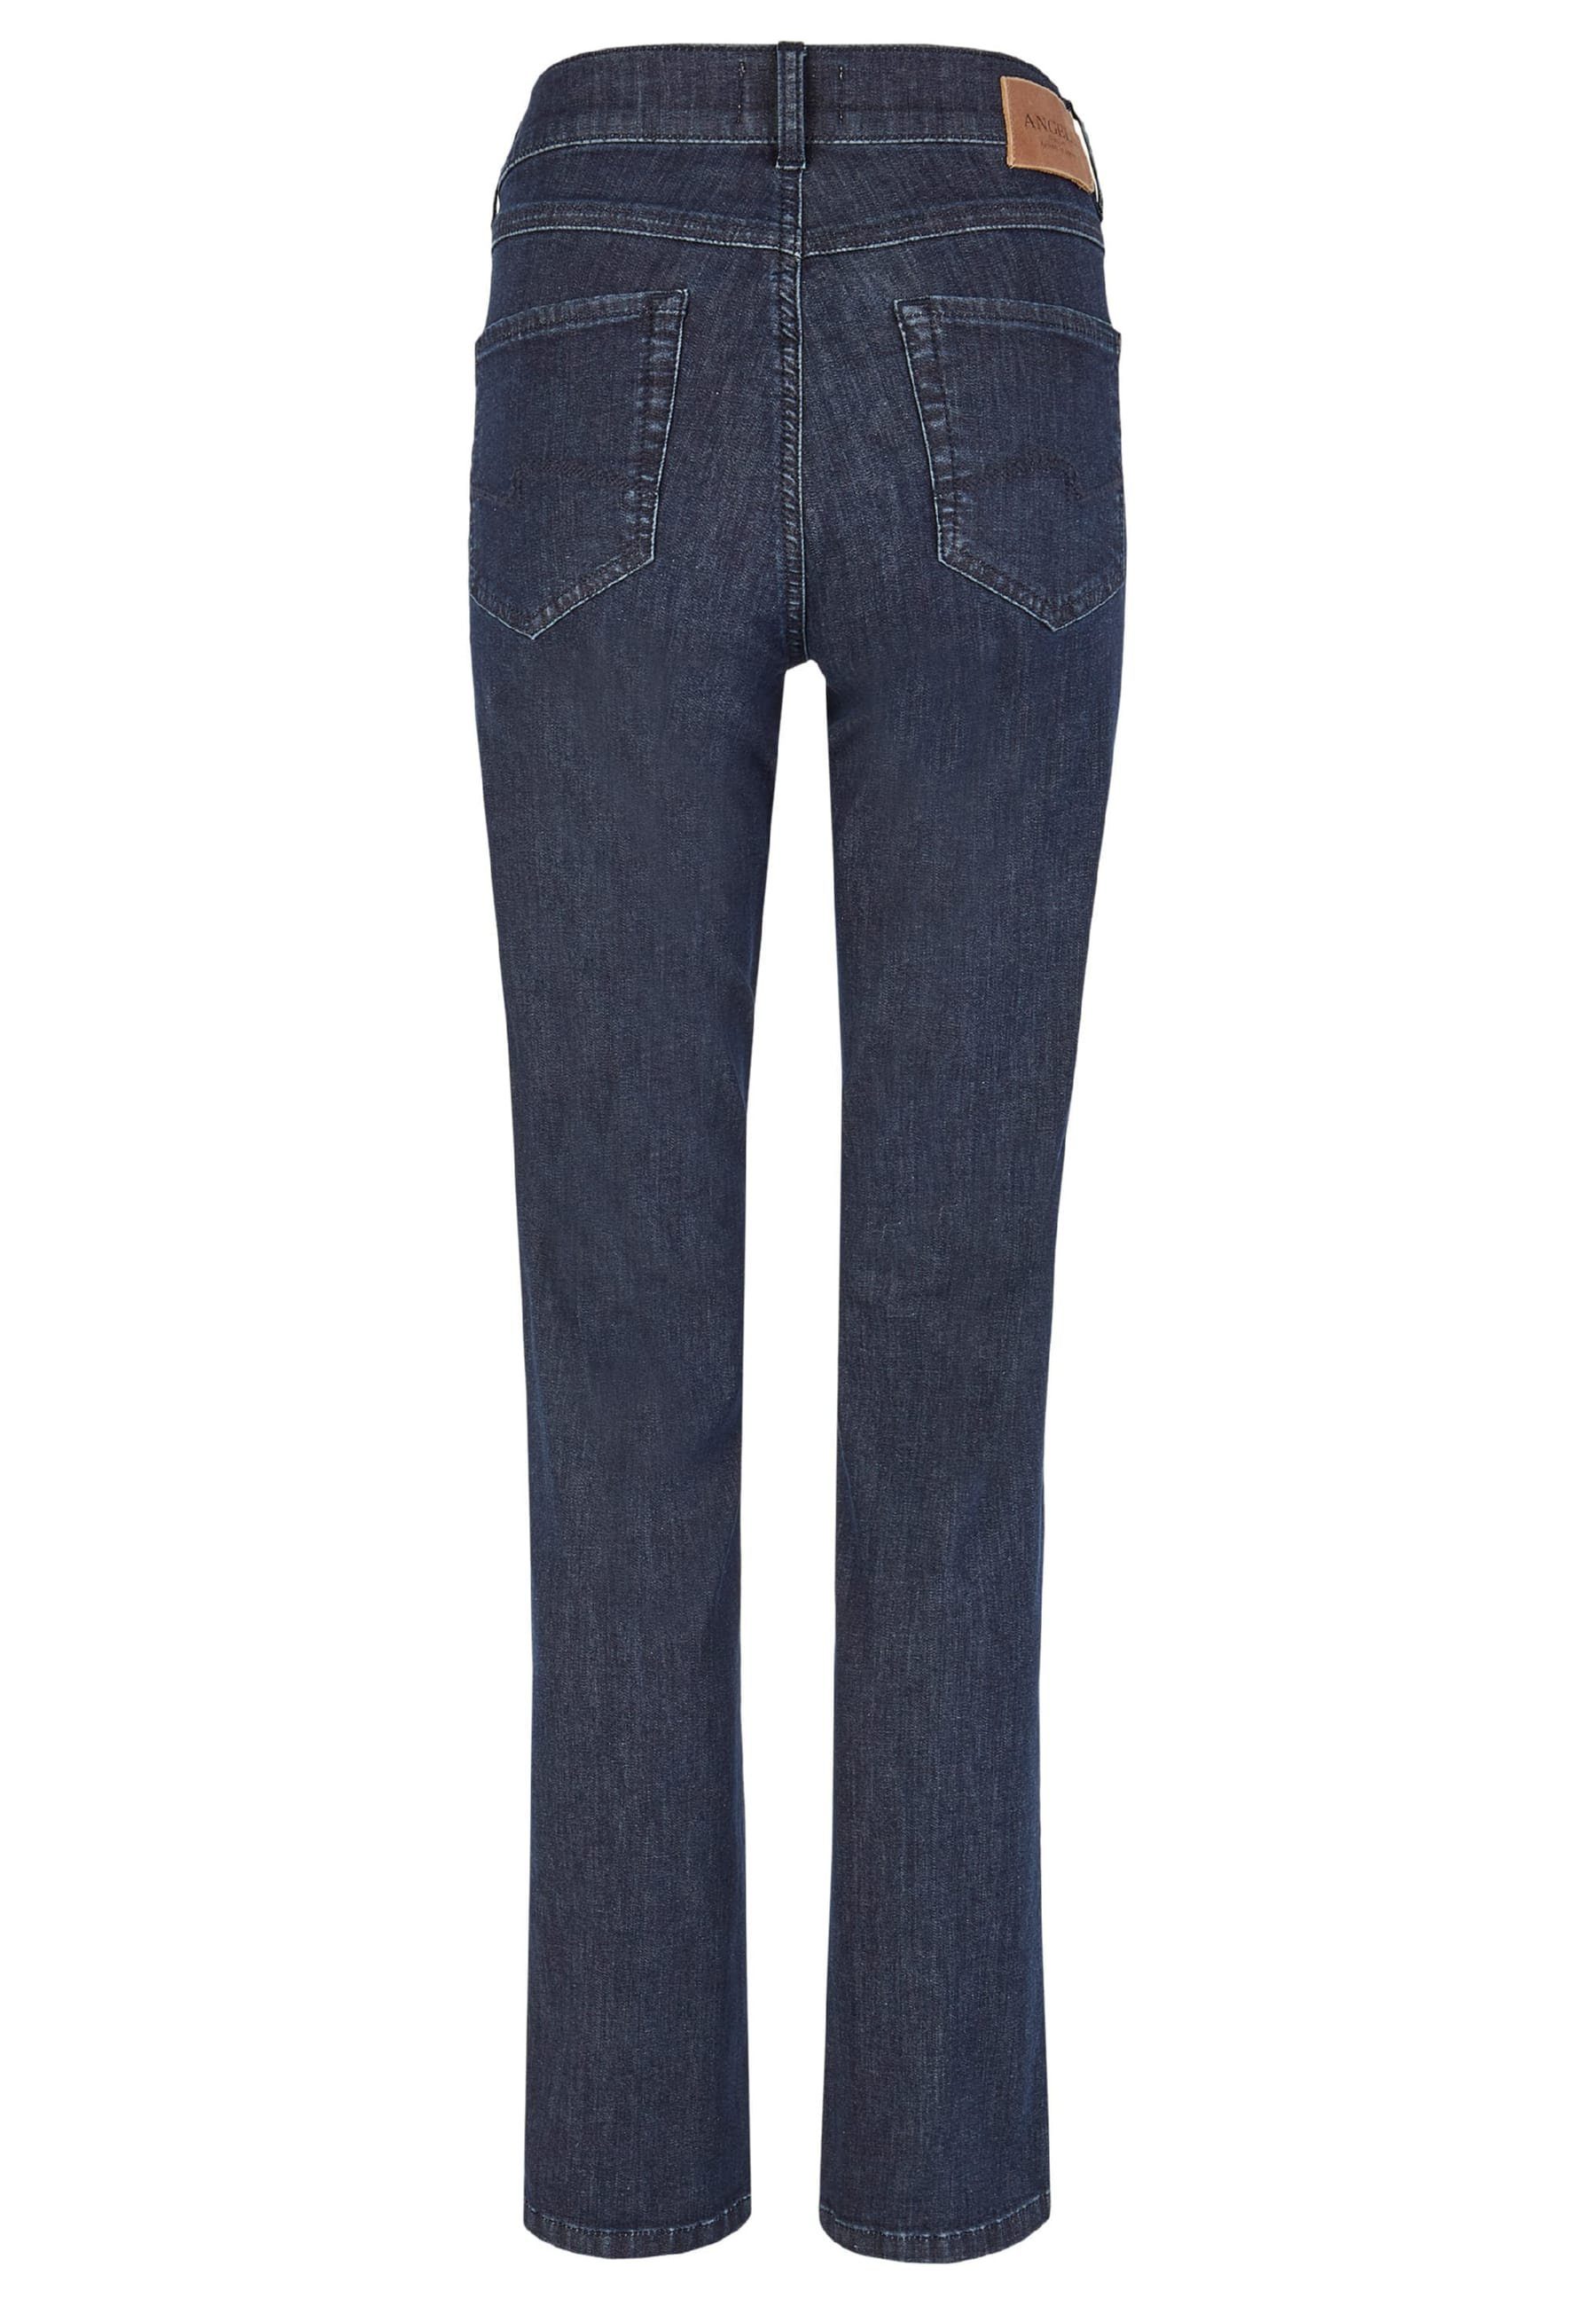 mit blau ANGELS Jeans Organic Cotton Label-Applikationen Straight-Jeans mit Cici